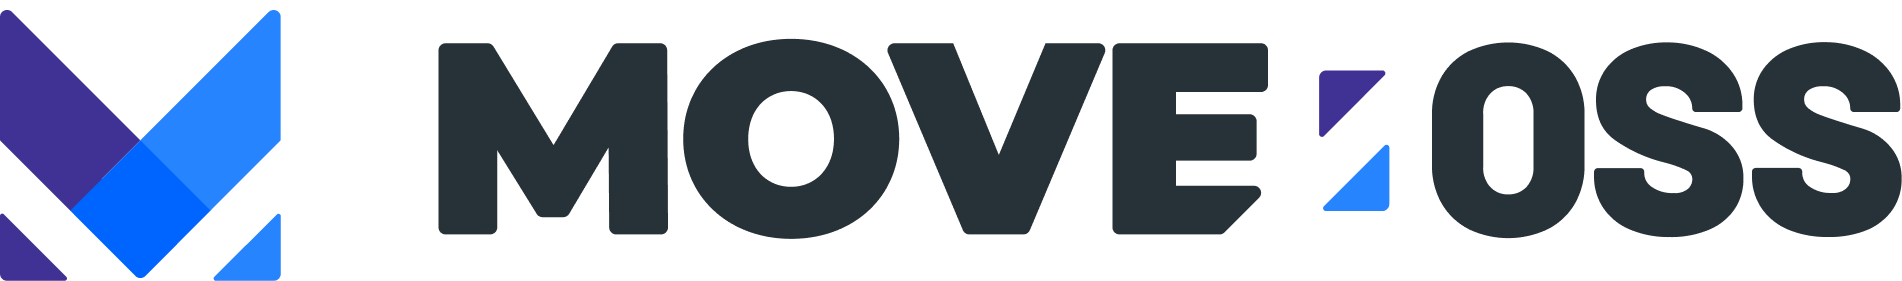 MoveOss logo